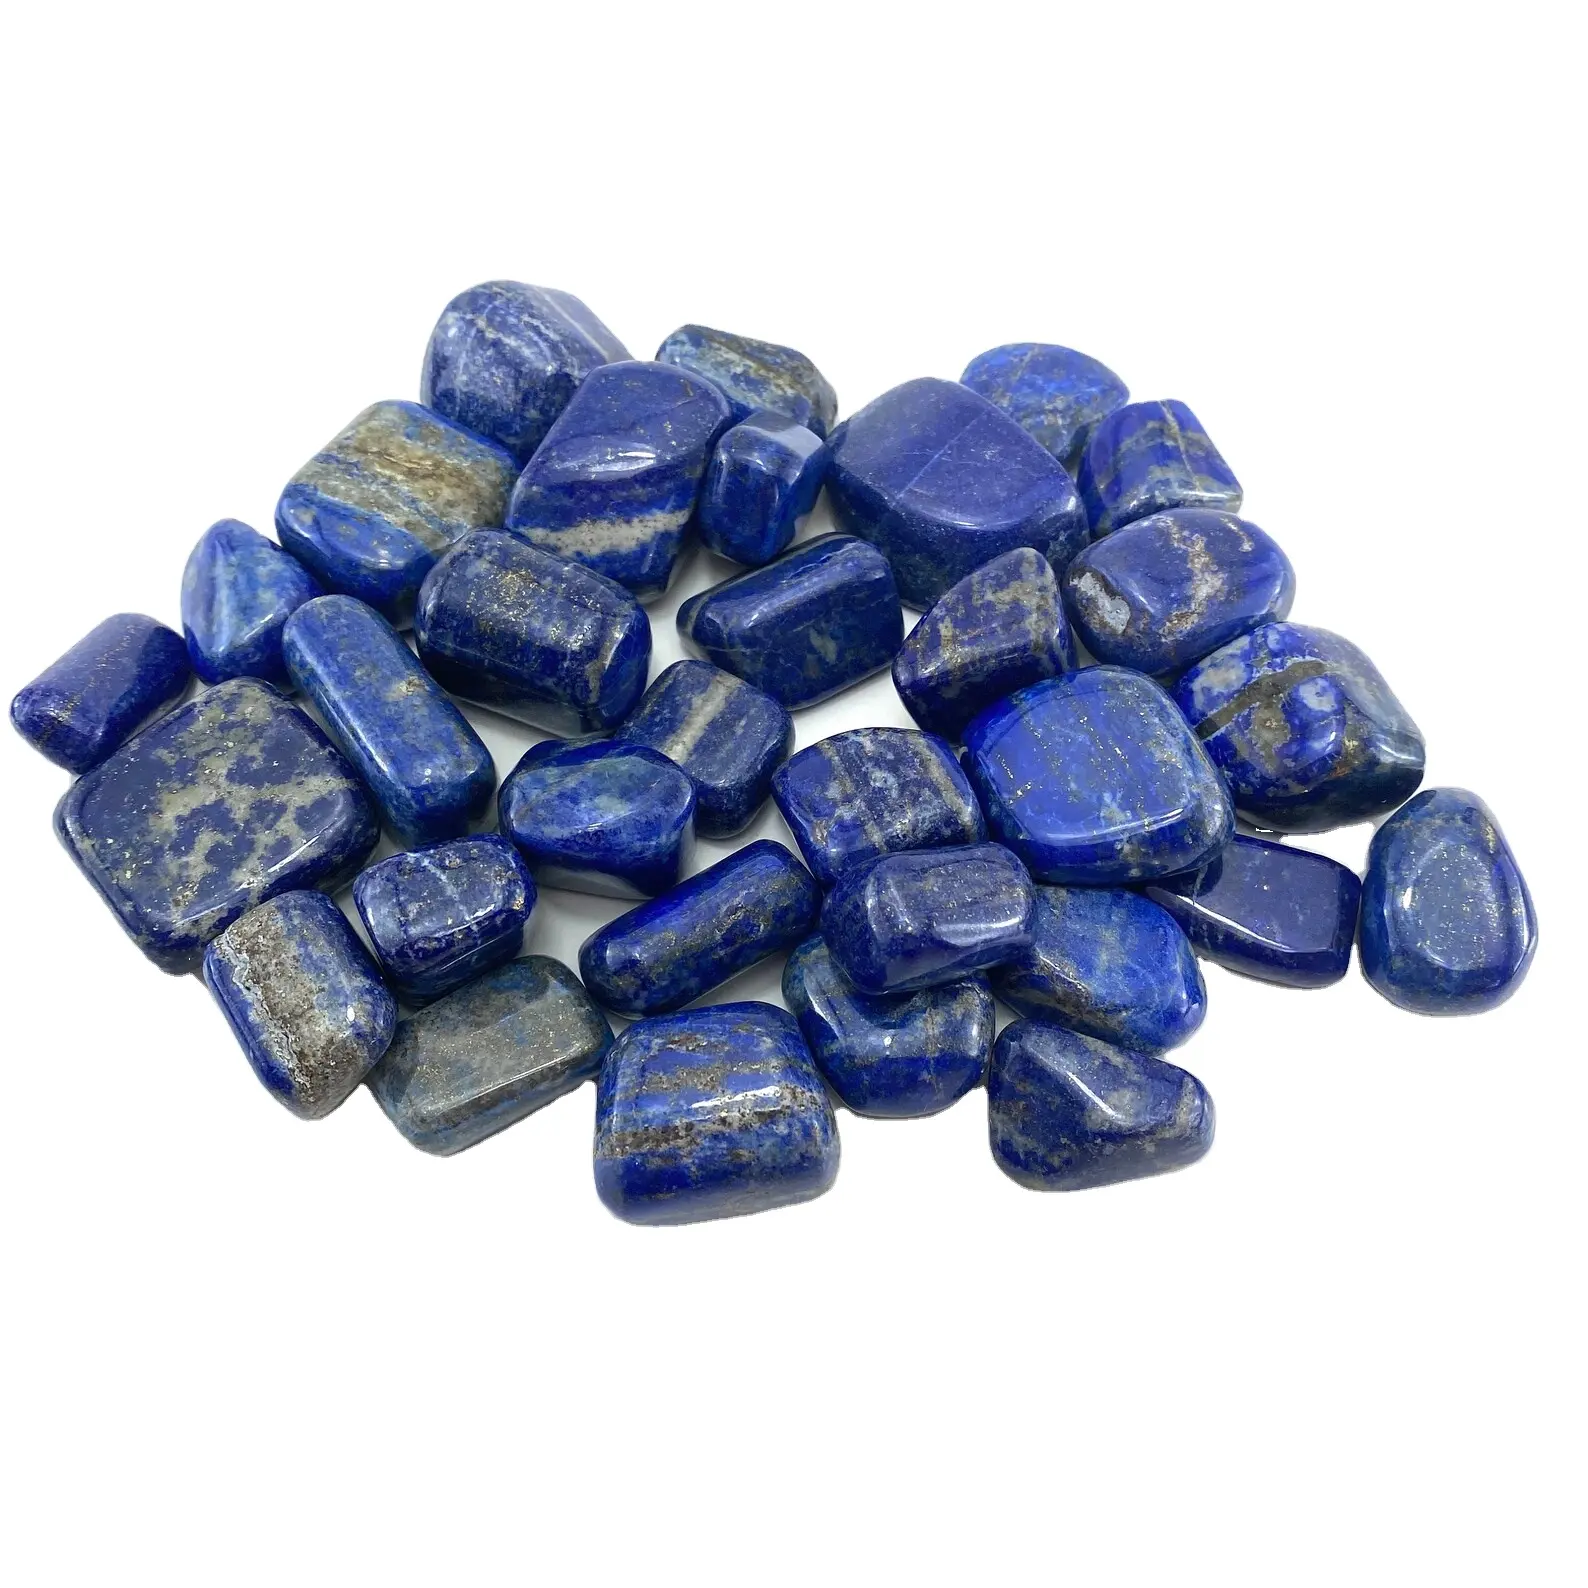 Hermosas piedras caídas de lapislázuli, lapislázuli azul pulido, cristales a granel, piedras preciosas de lapislázuli, decoración del hogar, curación